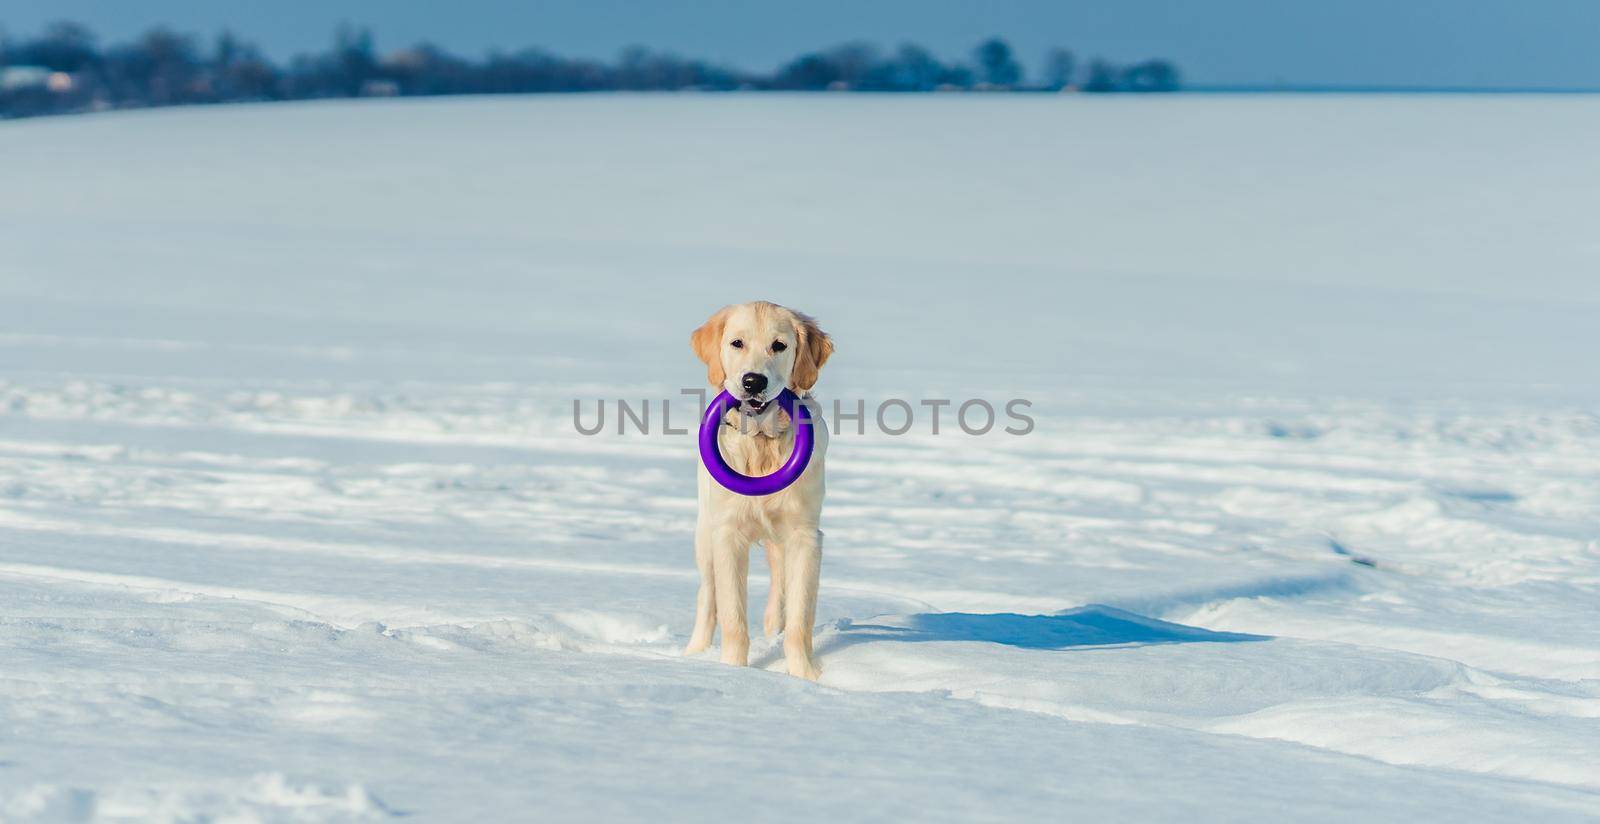 Lovely golden retriever dog playing outside in winter